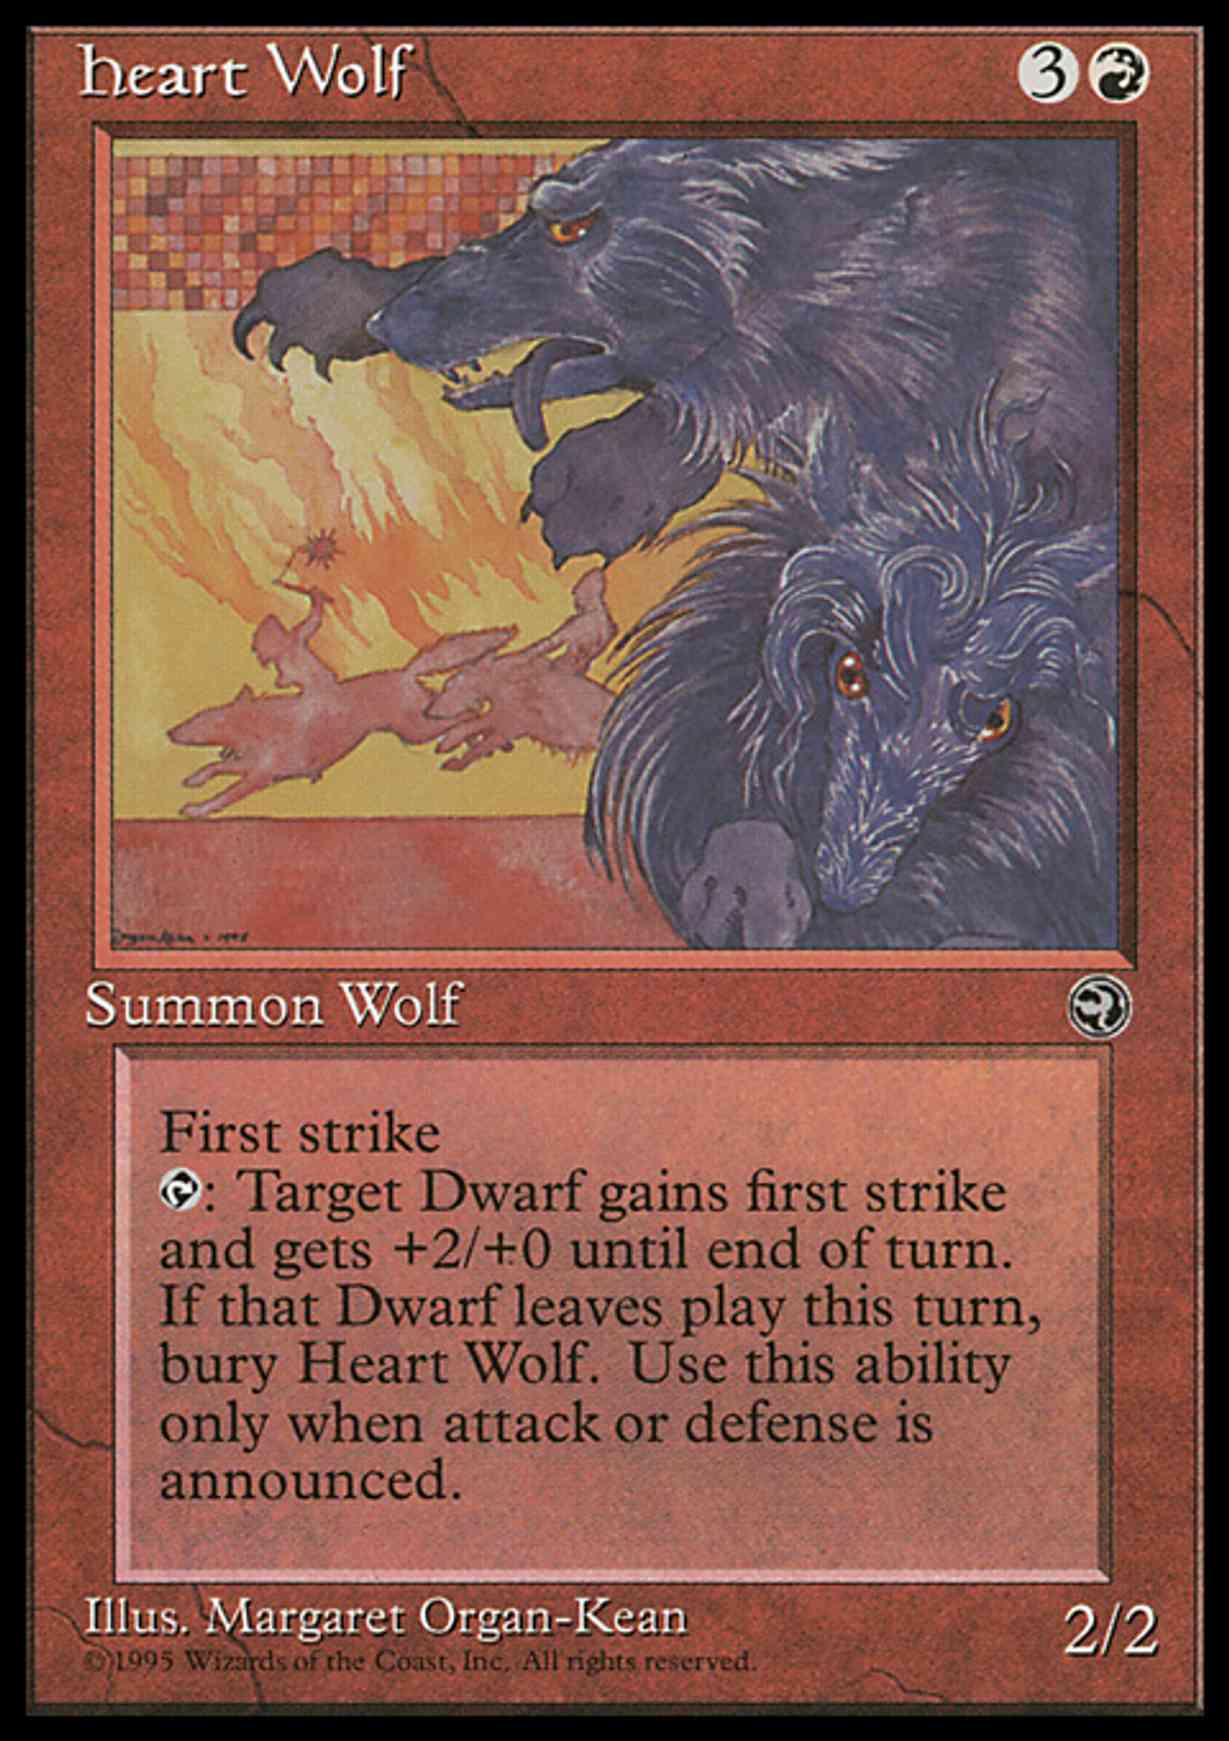 Heart Wolf magic card front